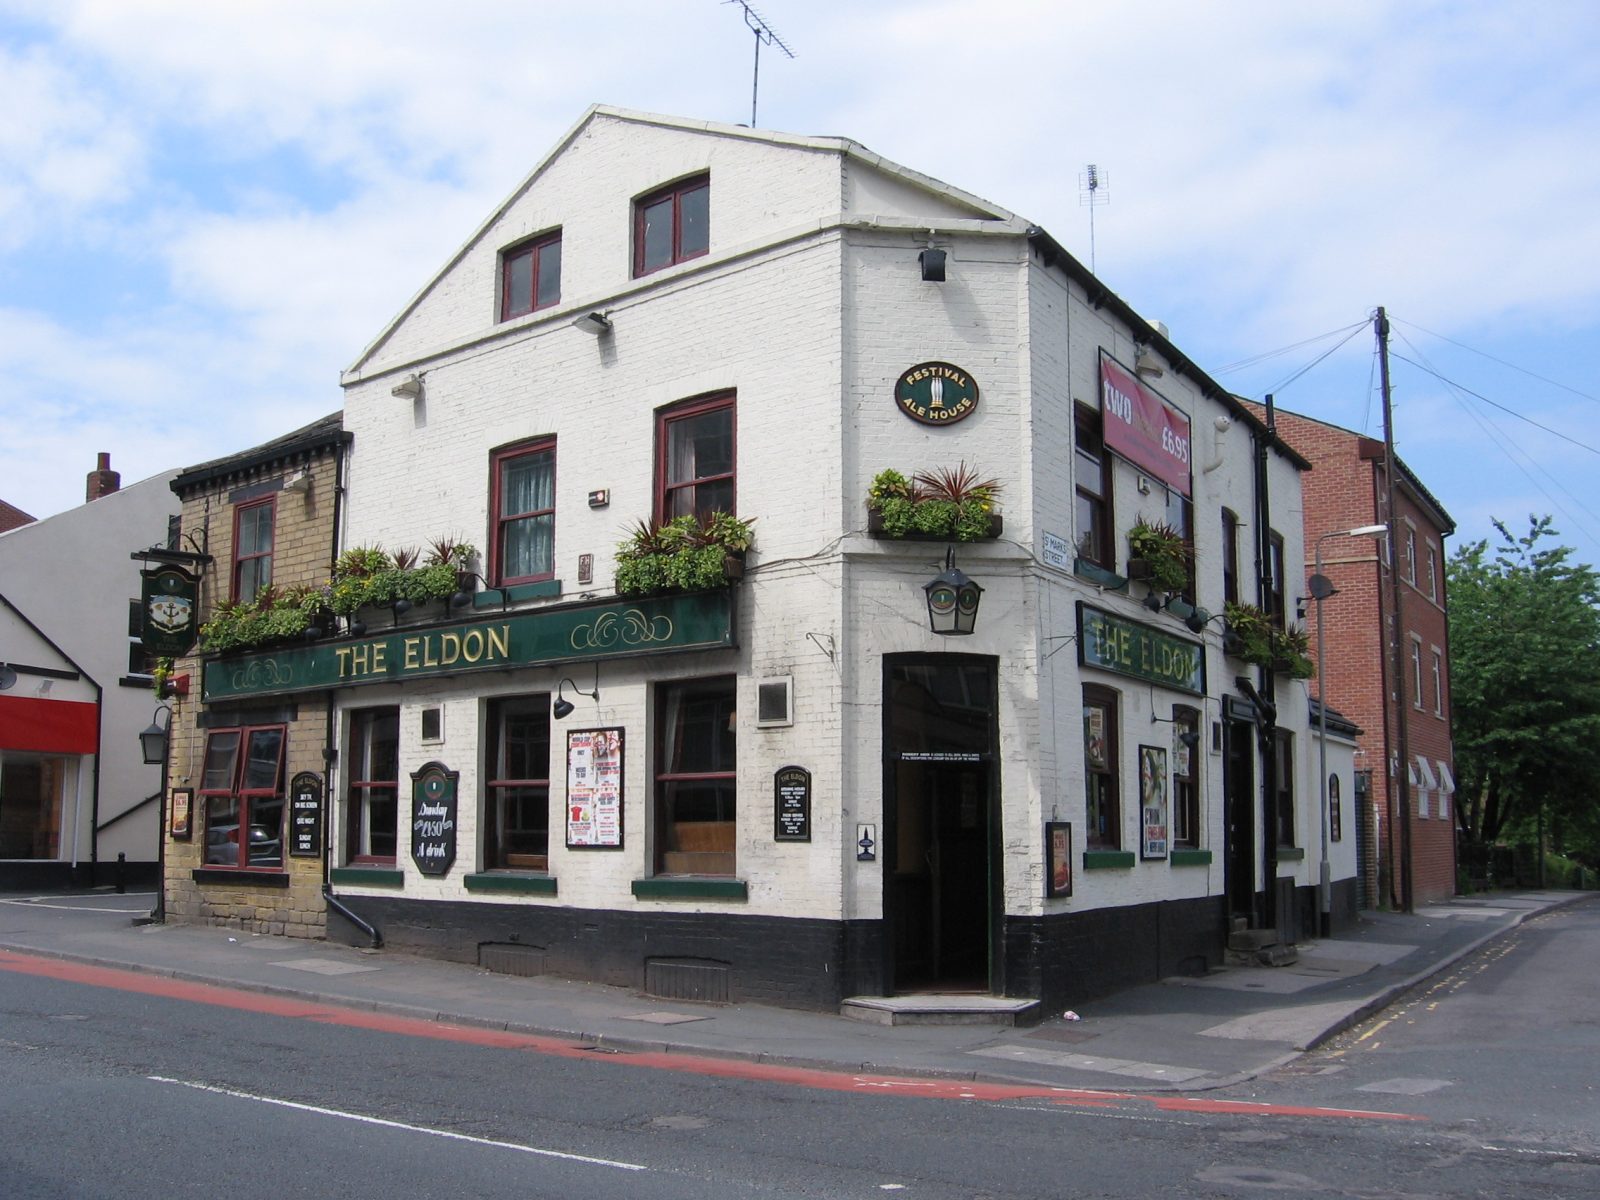 The Eldon pub in Leeds